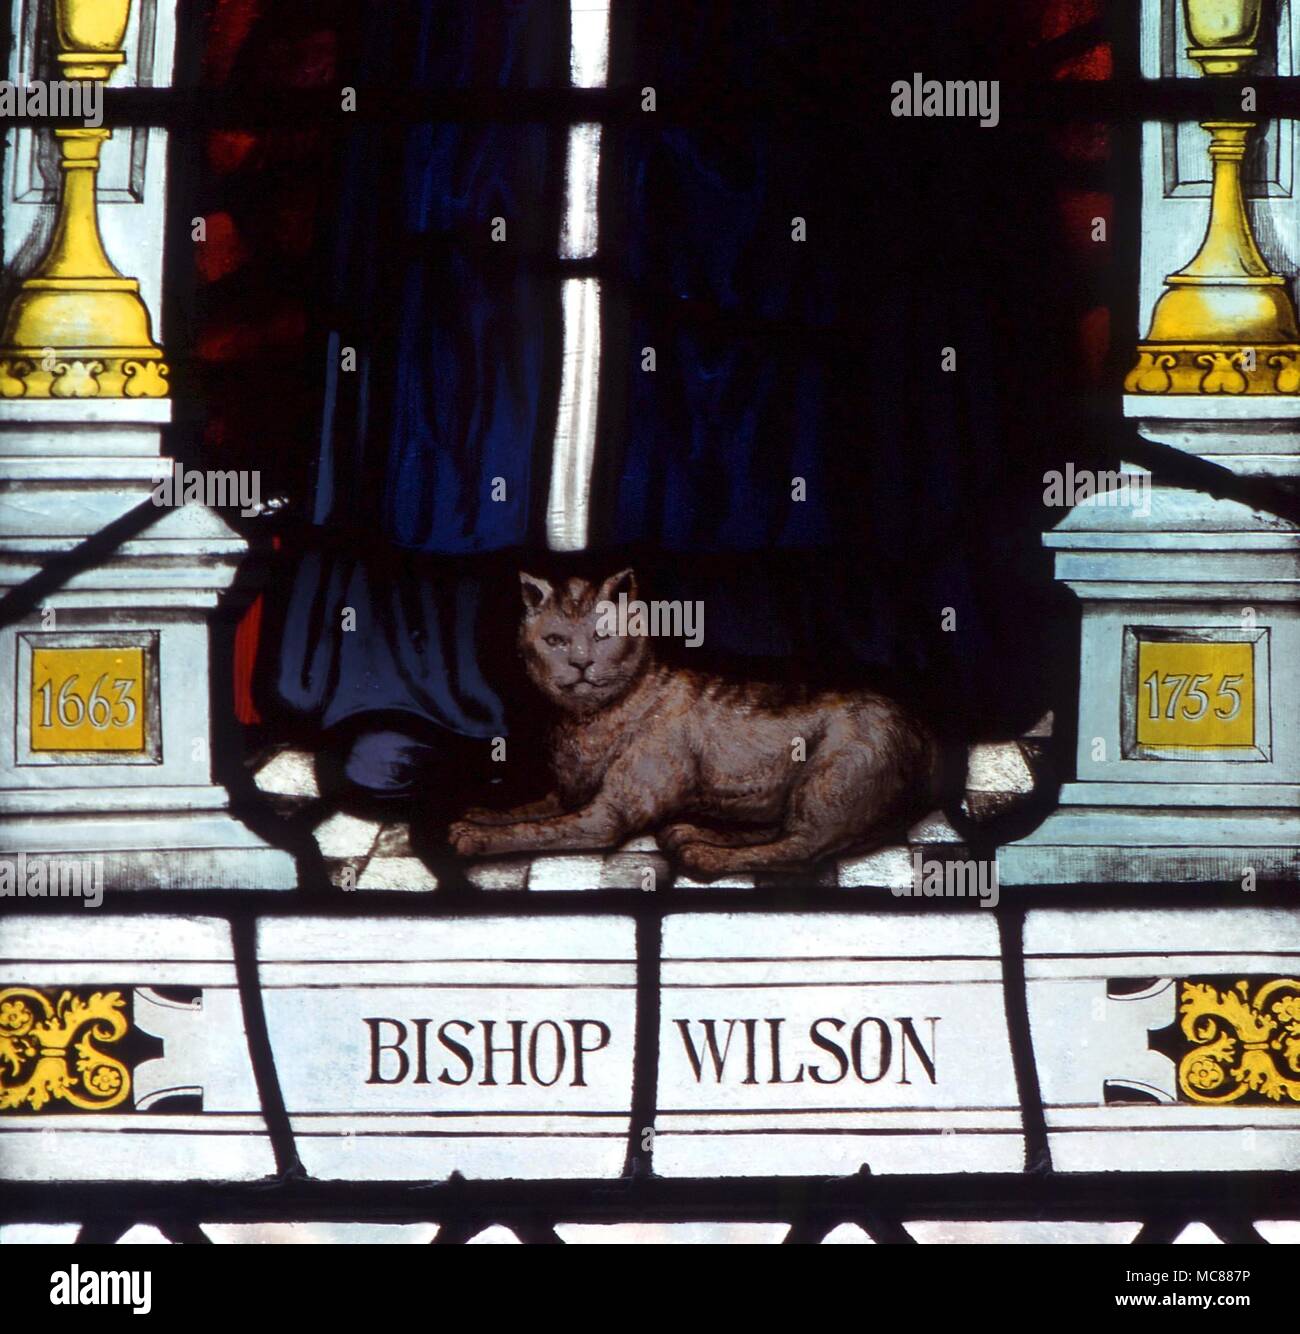 CHRISTIAN - Bishop Wilson Stock Photo